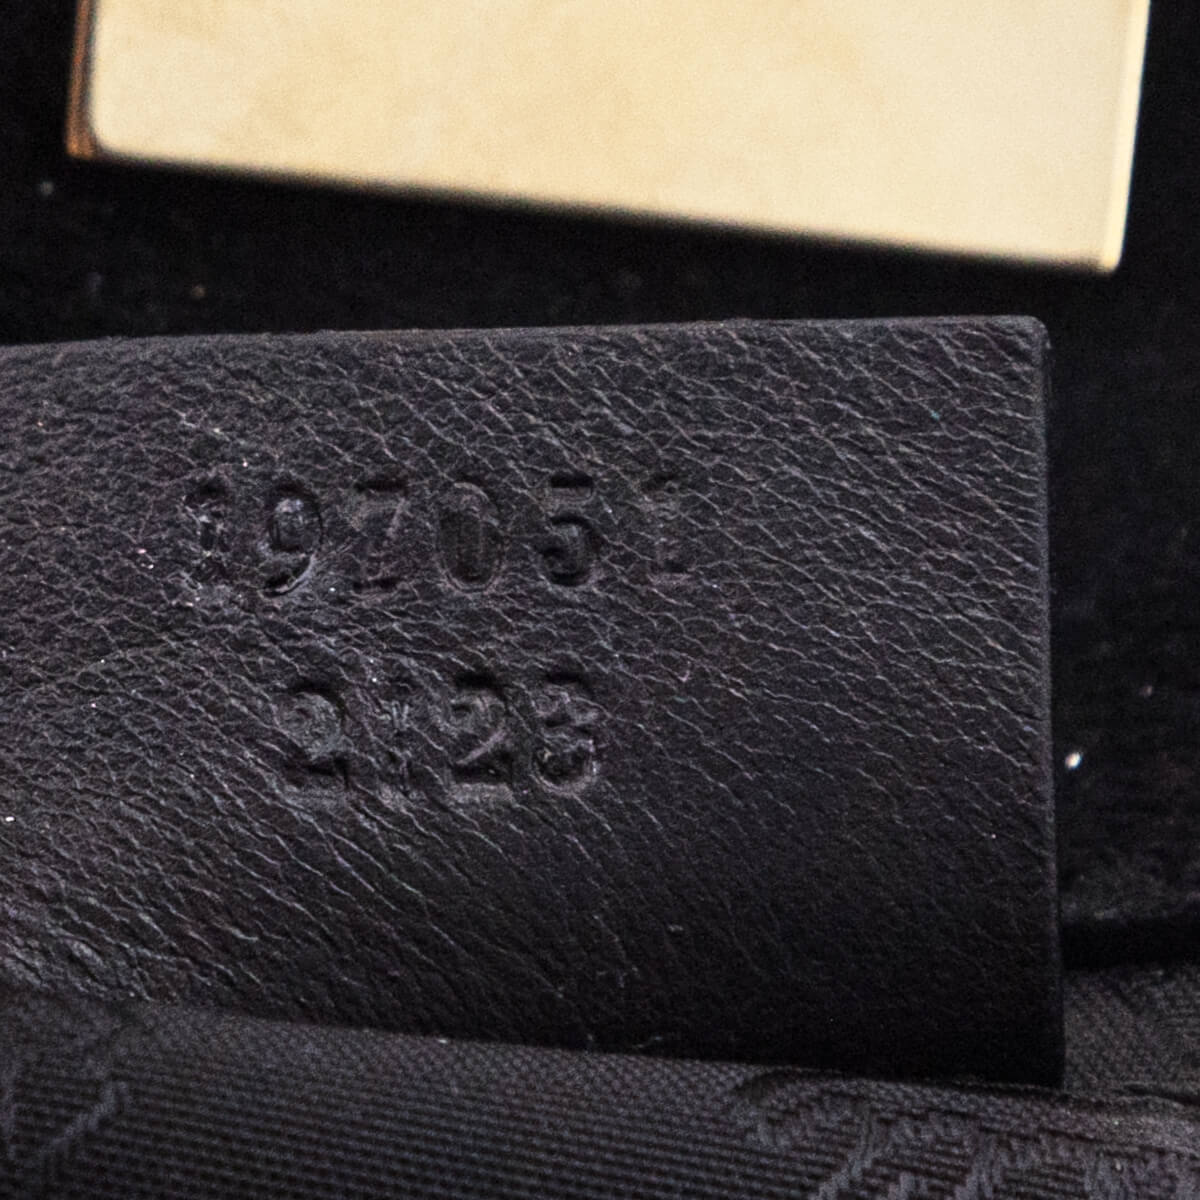 Gucci Black Patent Mini Babouska Indy Bag - Love that Bag etc - Preowned Authentic Designer Handbags & Preloved Fashions